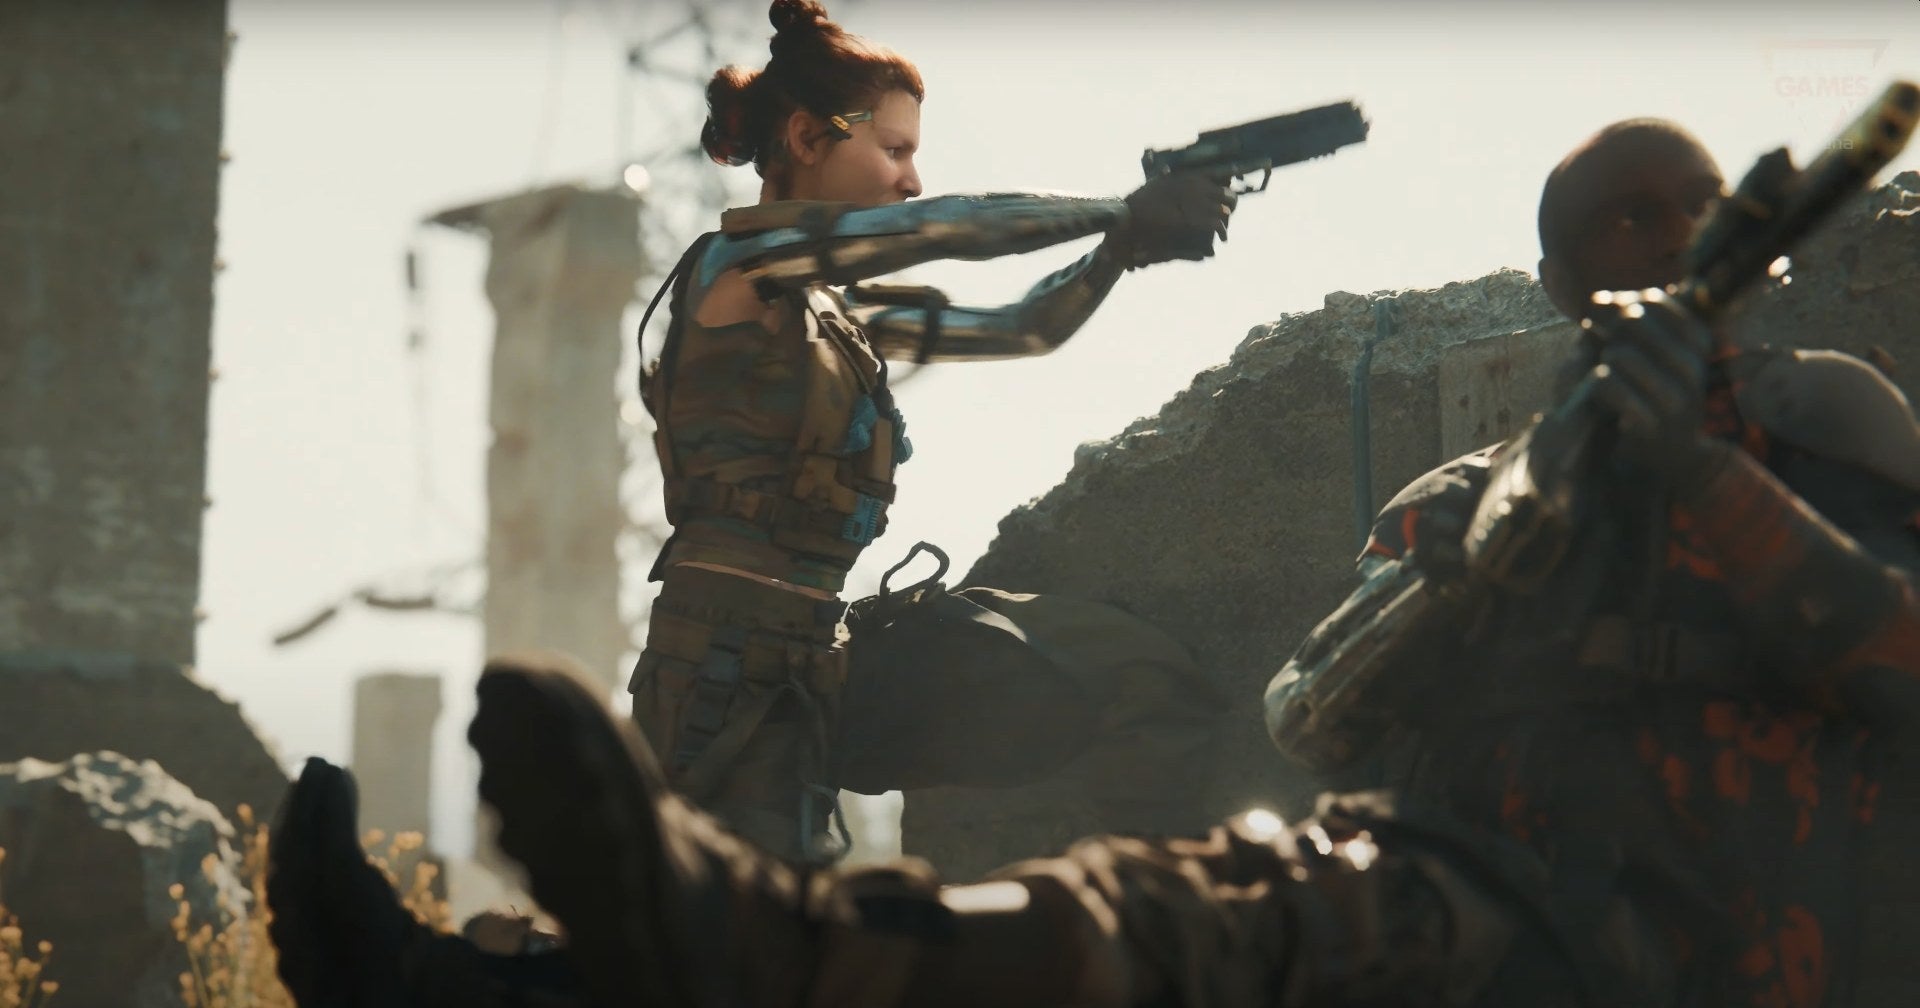 District 9 directors battle royale game gets a new trailer, but relies on NFTs Rock Paper Shotgun